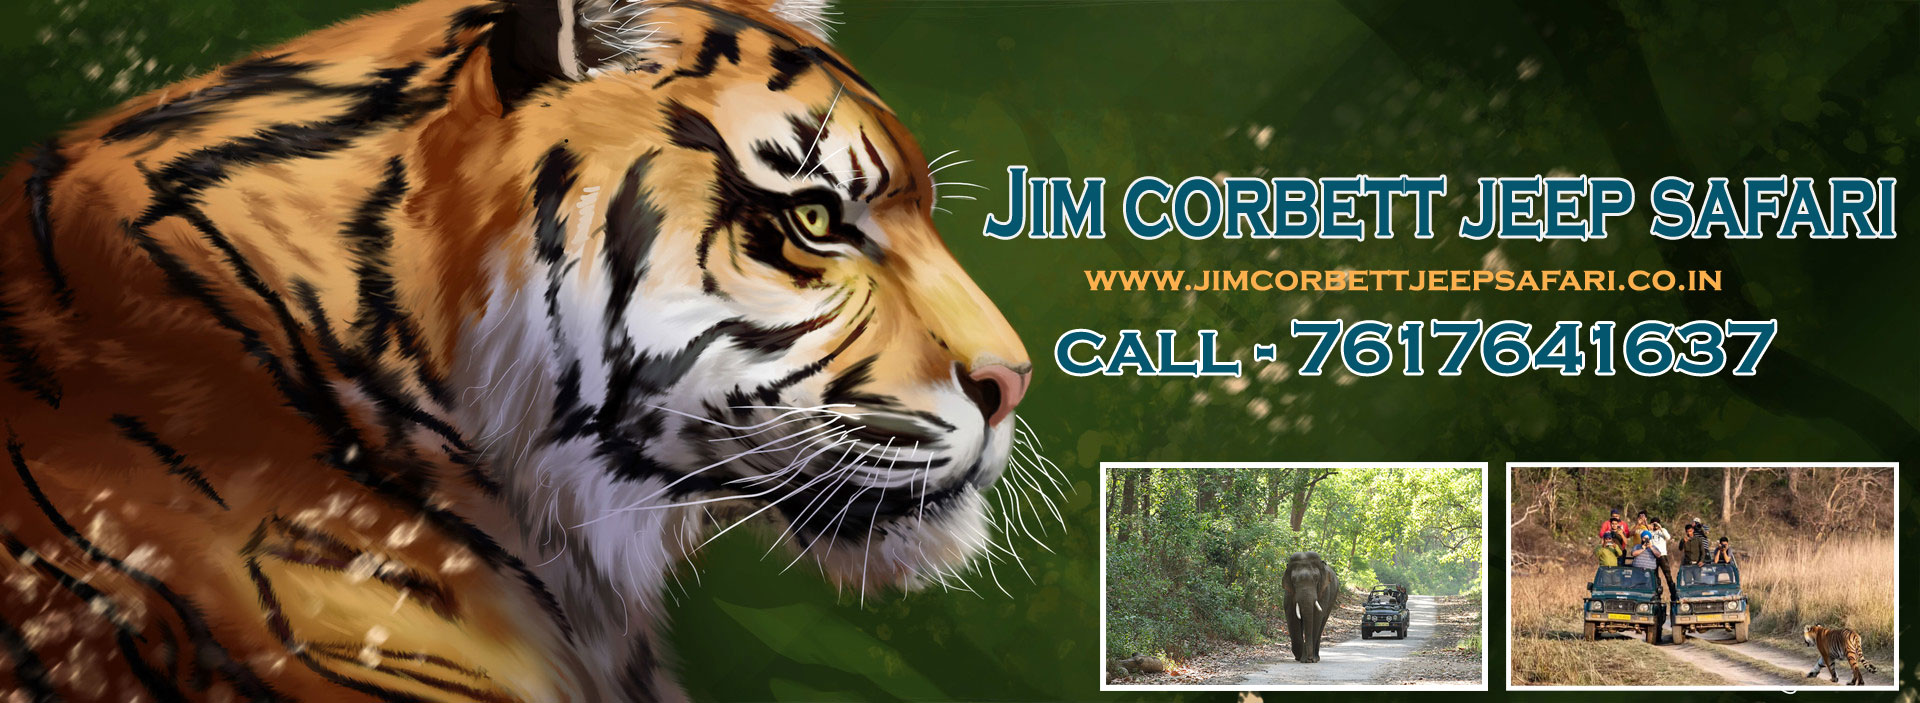 Jim Corbett Jeep Safari Banner